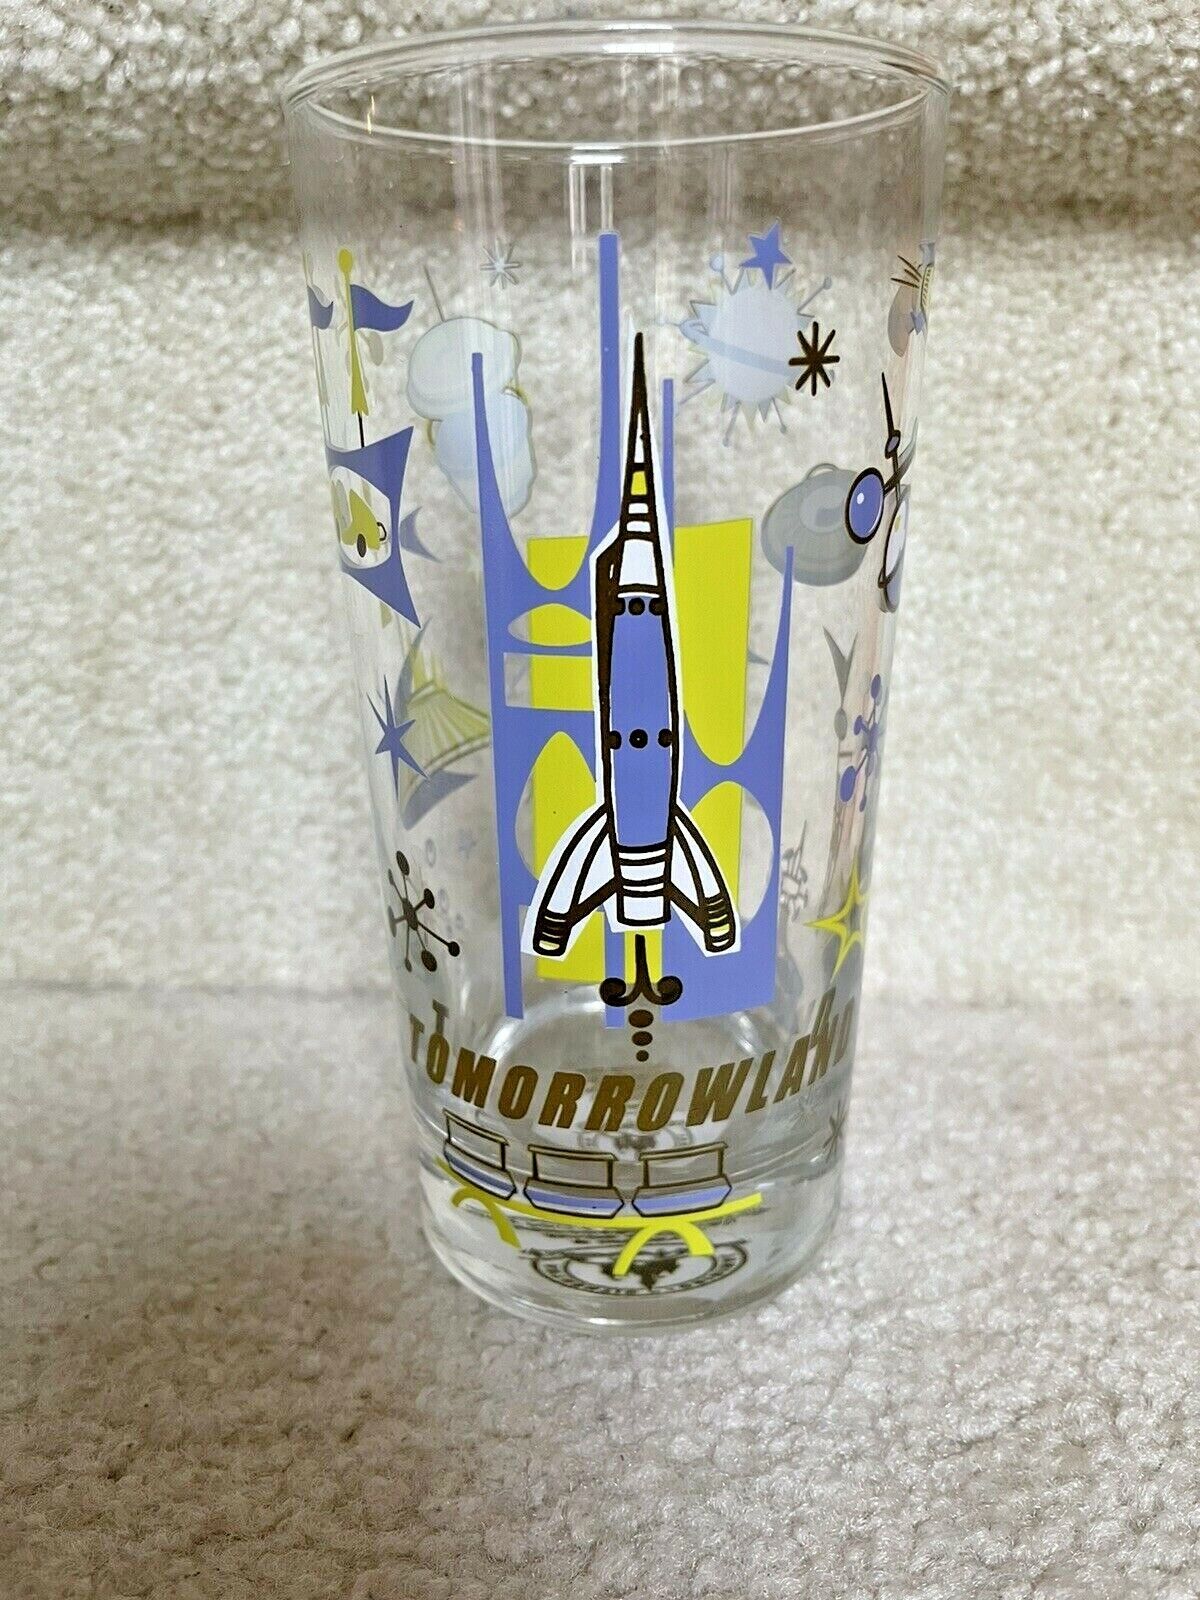 Tomorrowland Disneyland/World Space Mountain Submarine Voyage Glass Tumbler Cup 